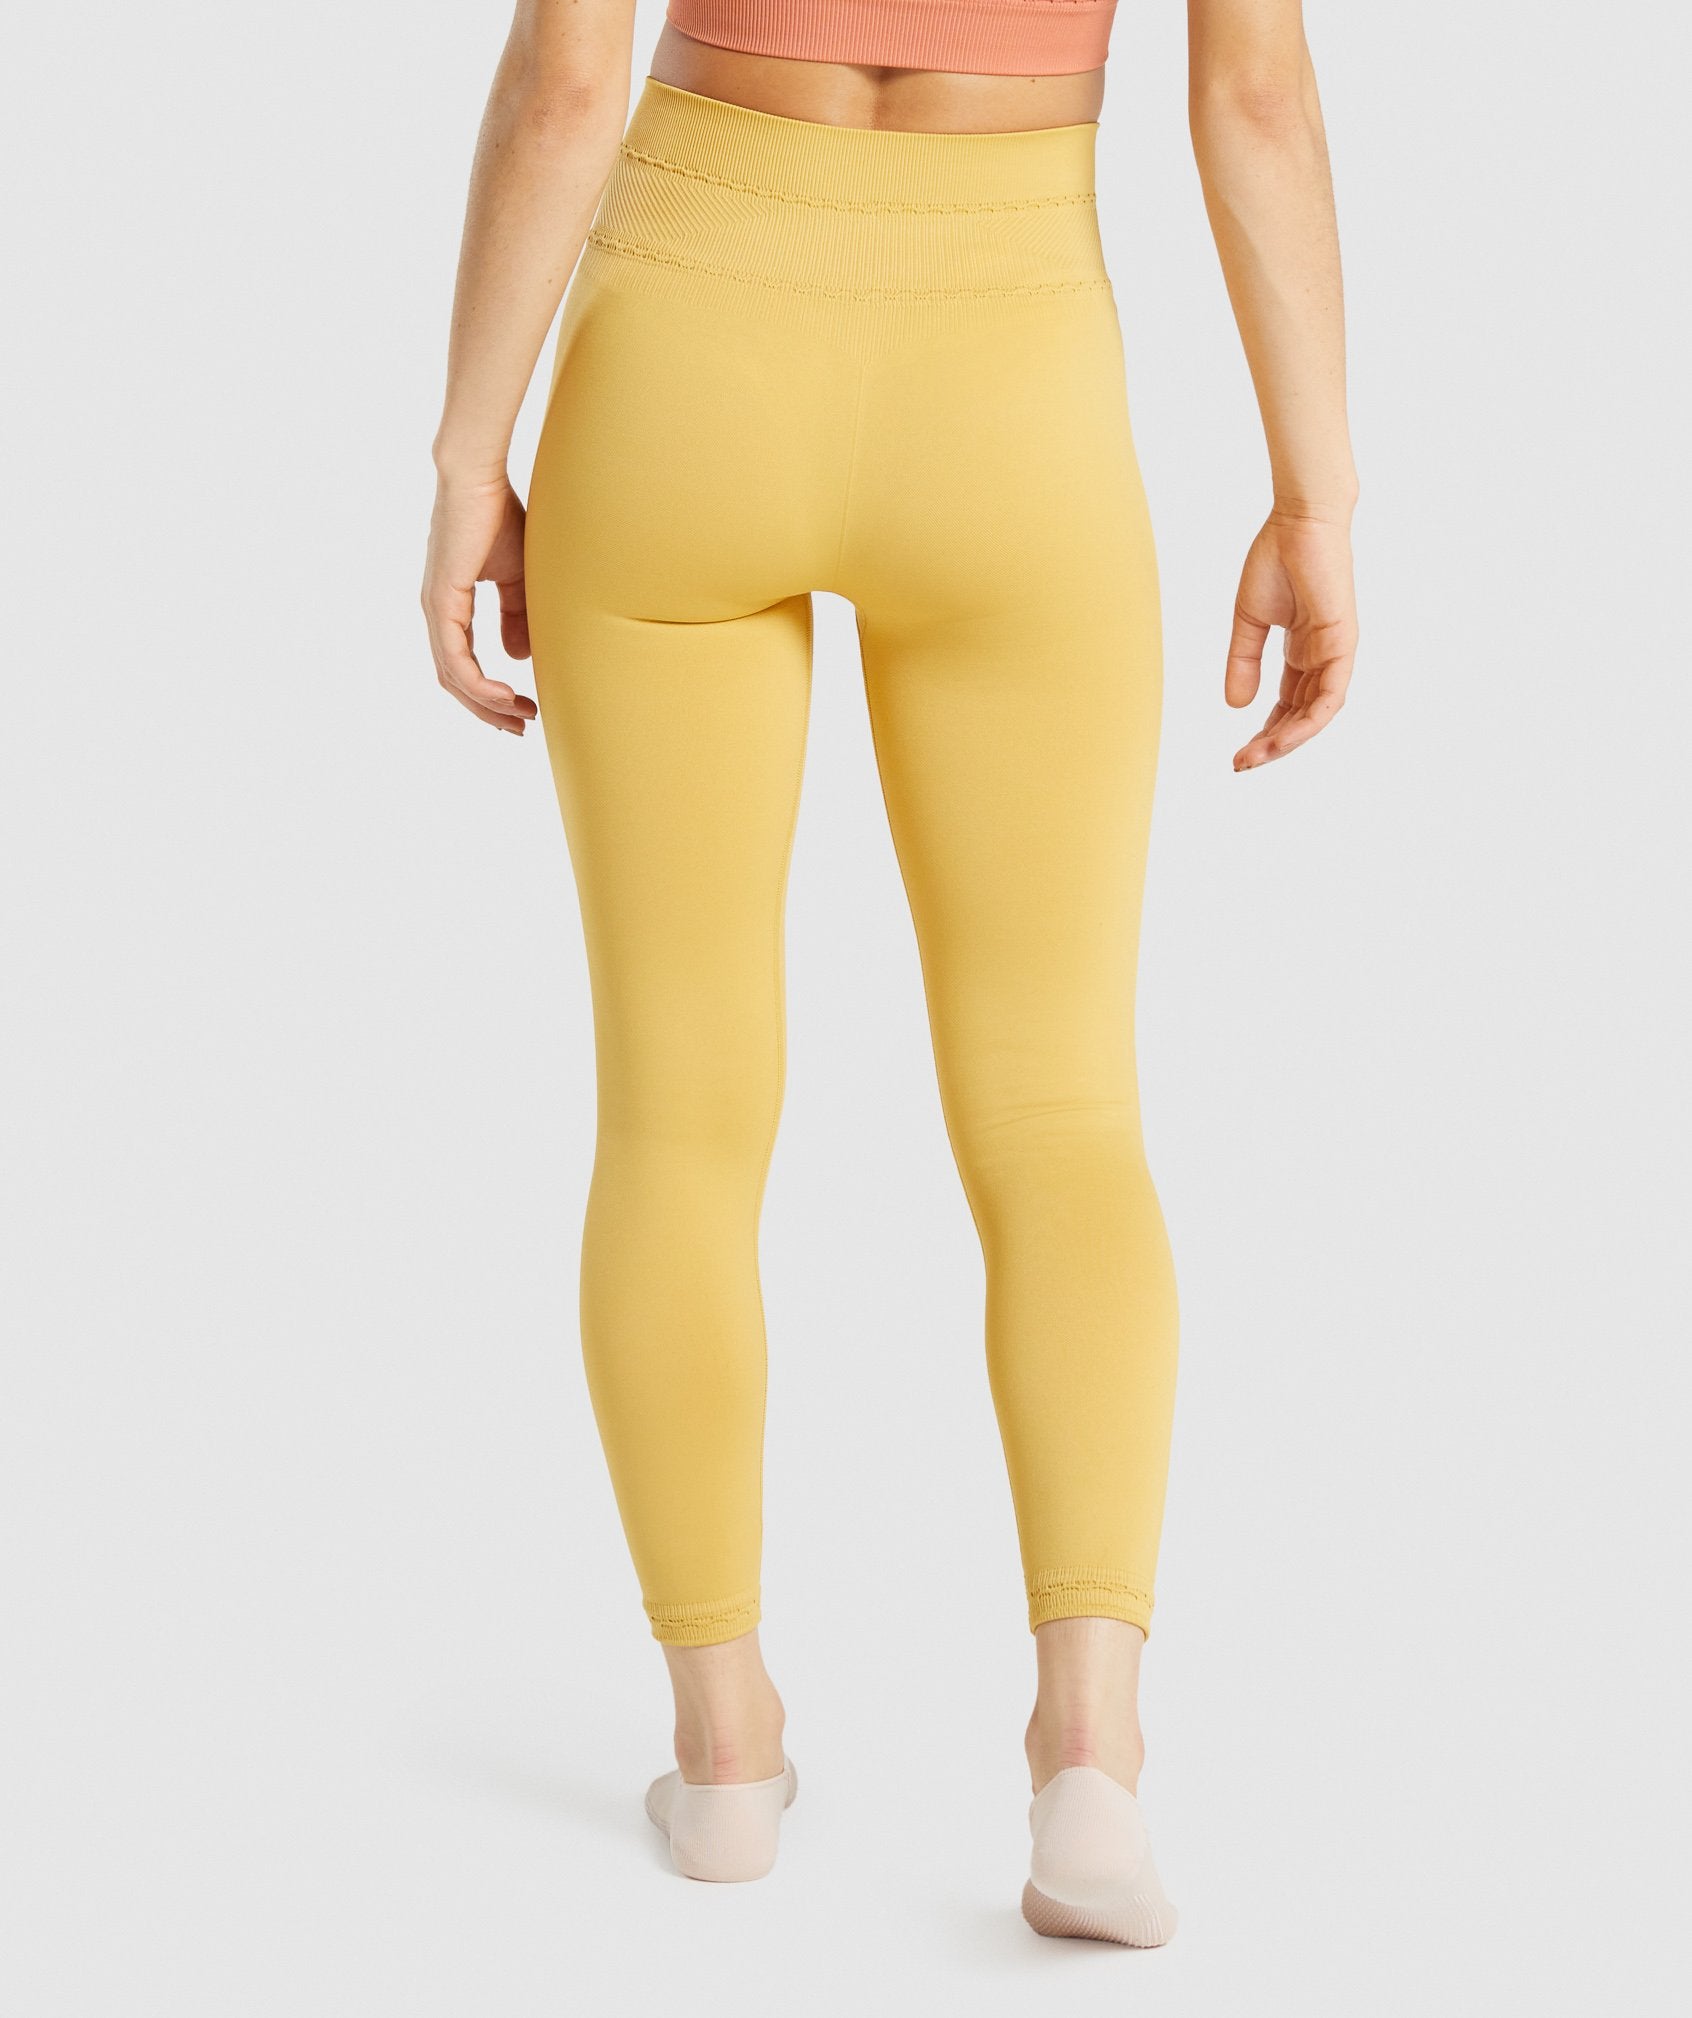 Women's training shorts Gymshark Adapt Camo Savanna Seamless indian yellow  